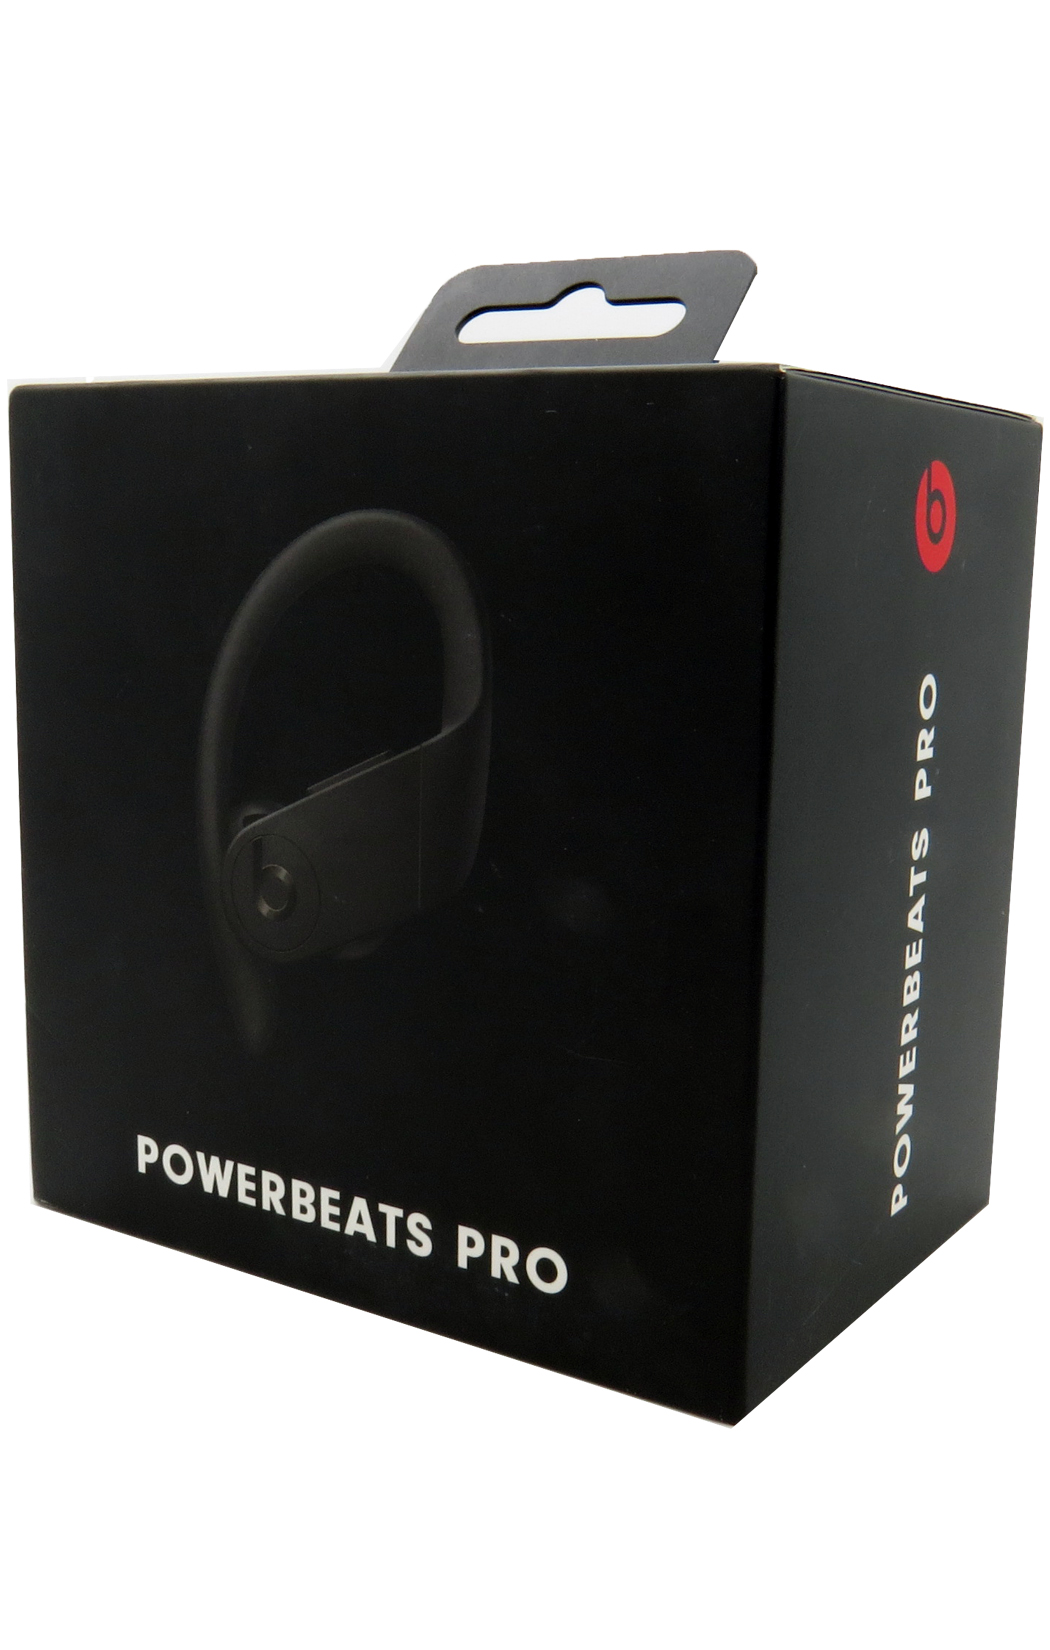 powerbeats pro totally